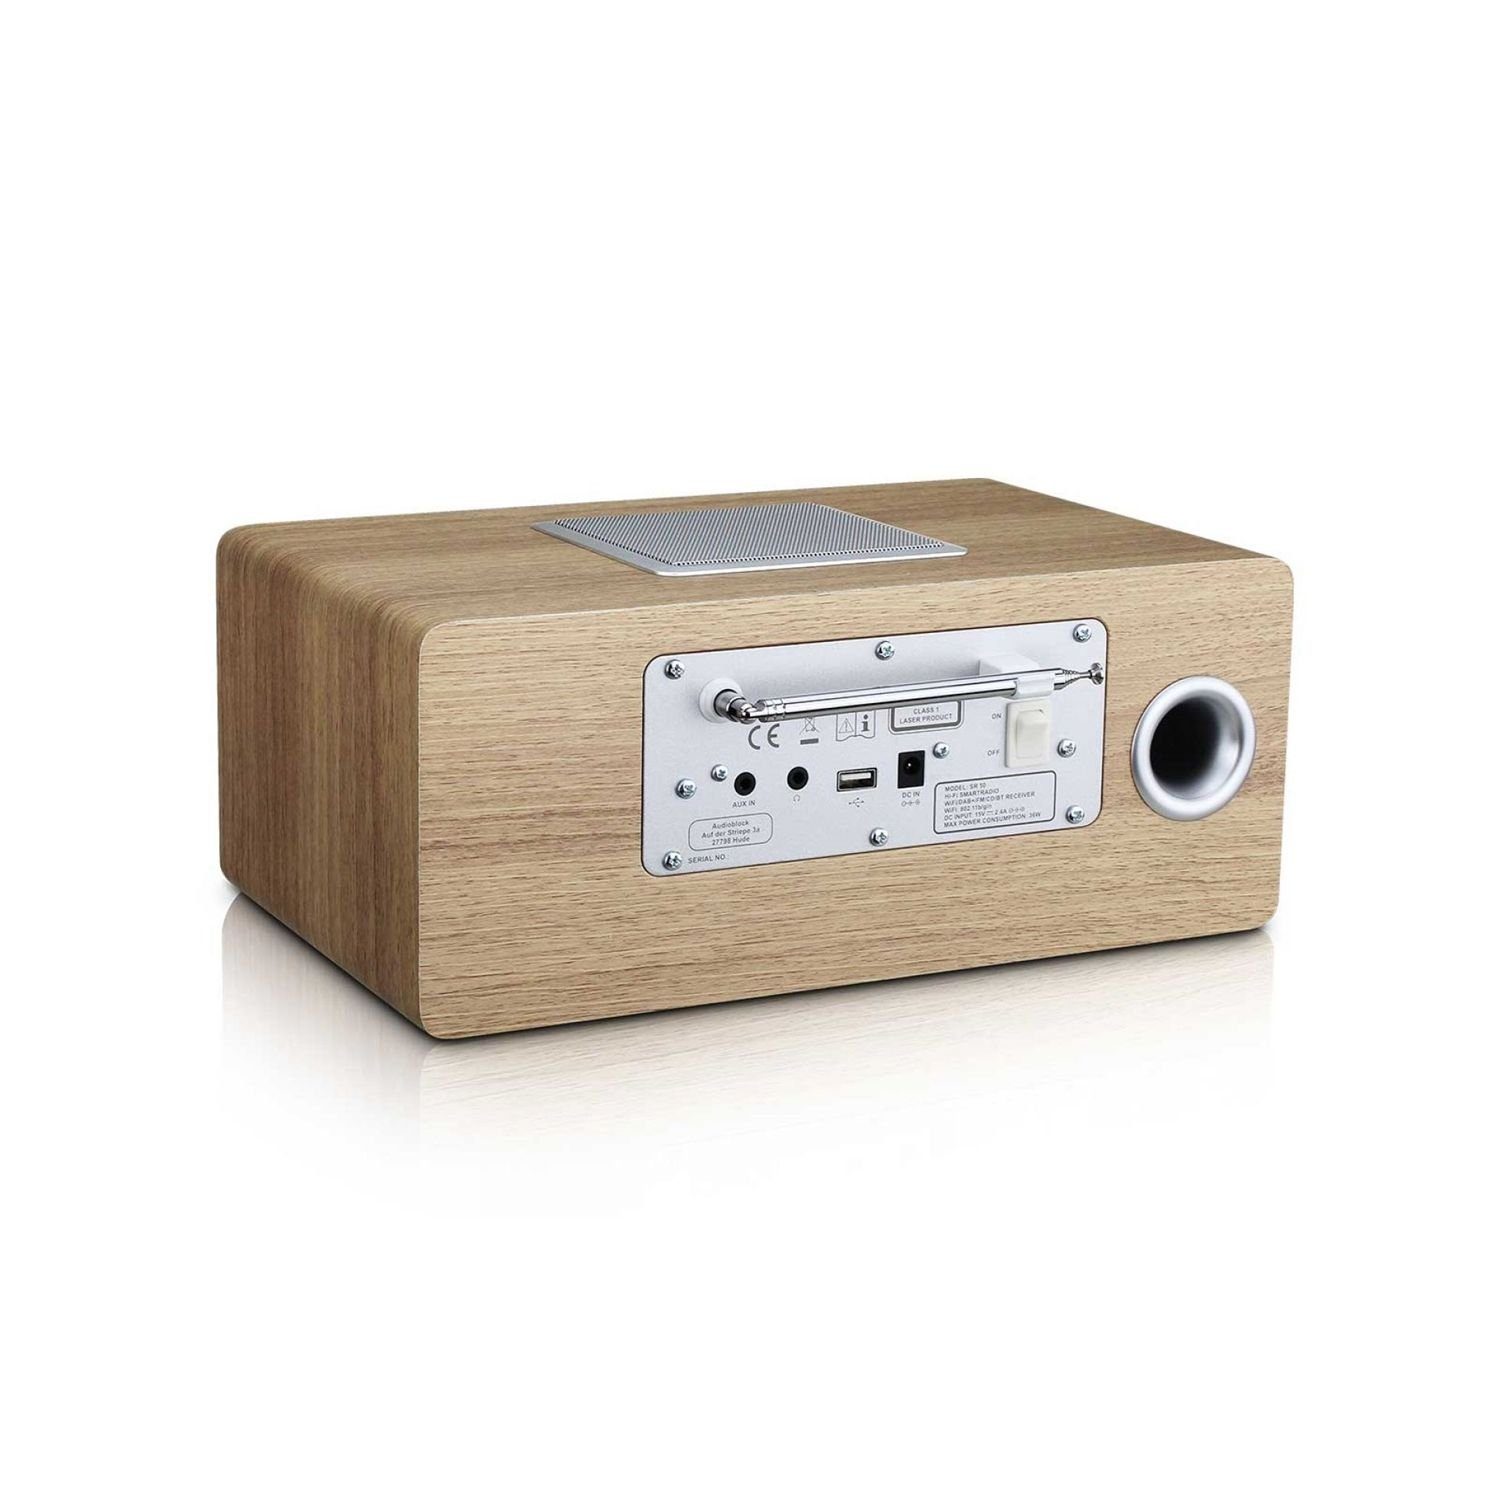 SR-50 (DAB) Digitalradio CD Spotify Block Smartradio UKW/DAB+/Internetradio walnuss/silber Bluetooth USB